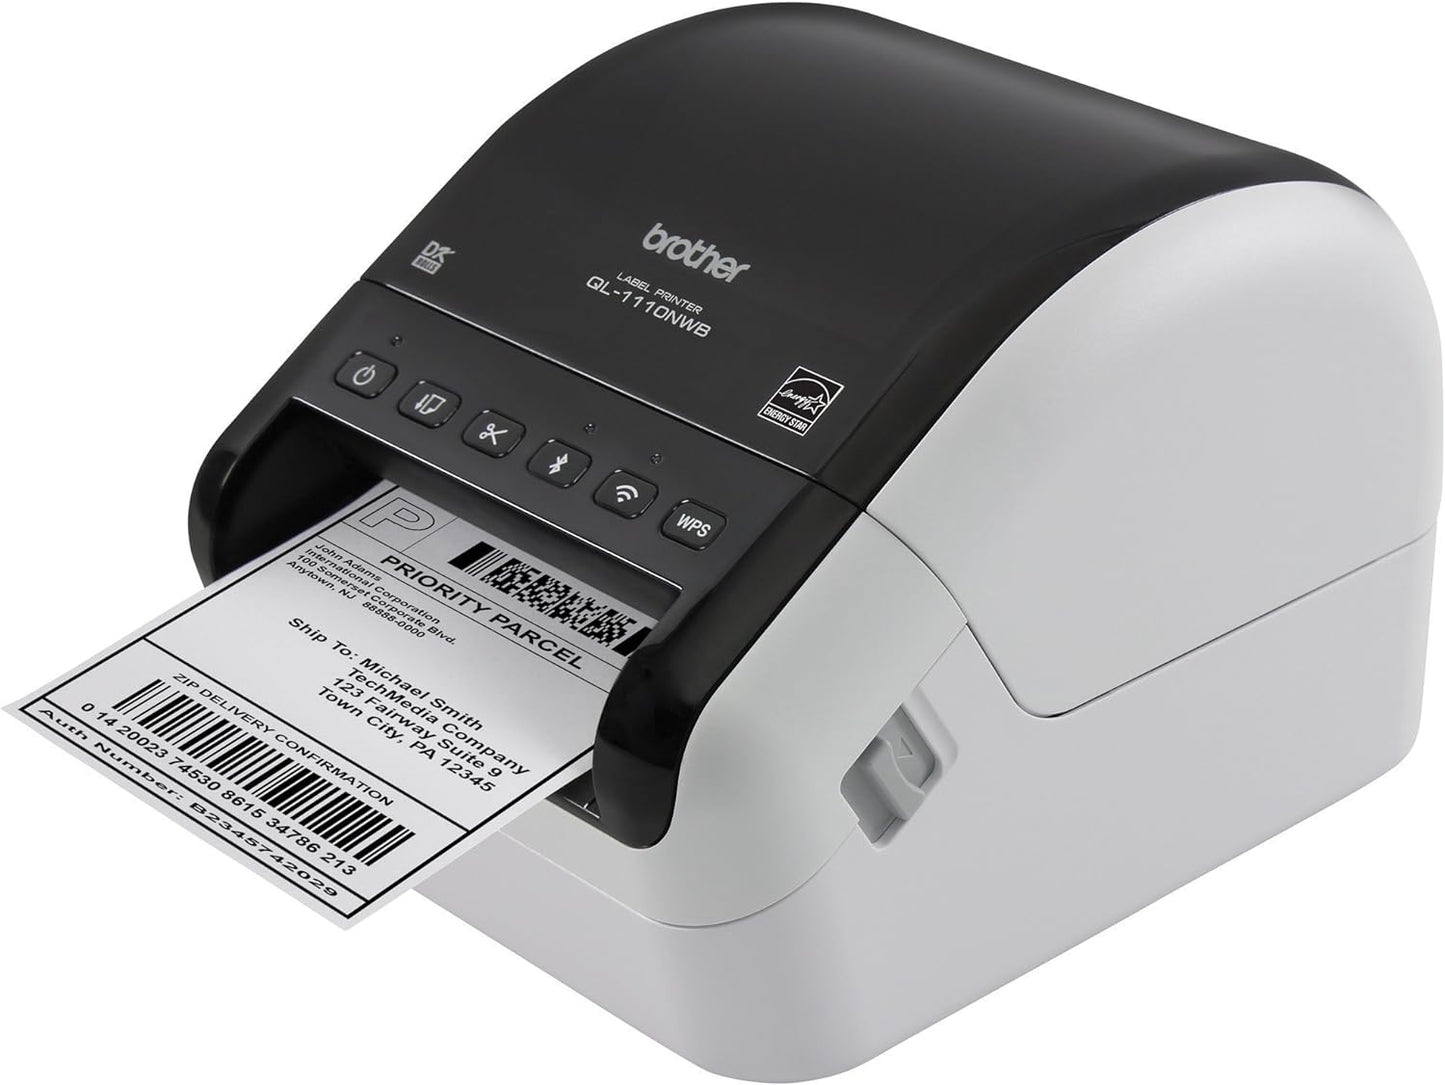 Brother QL1110NWB Desktop Thermal Label Printer Wide Format Wireless